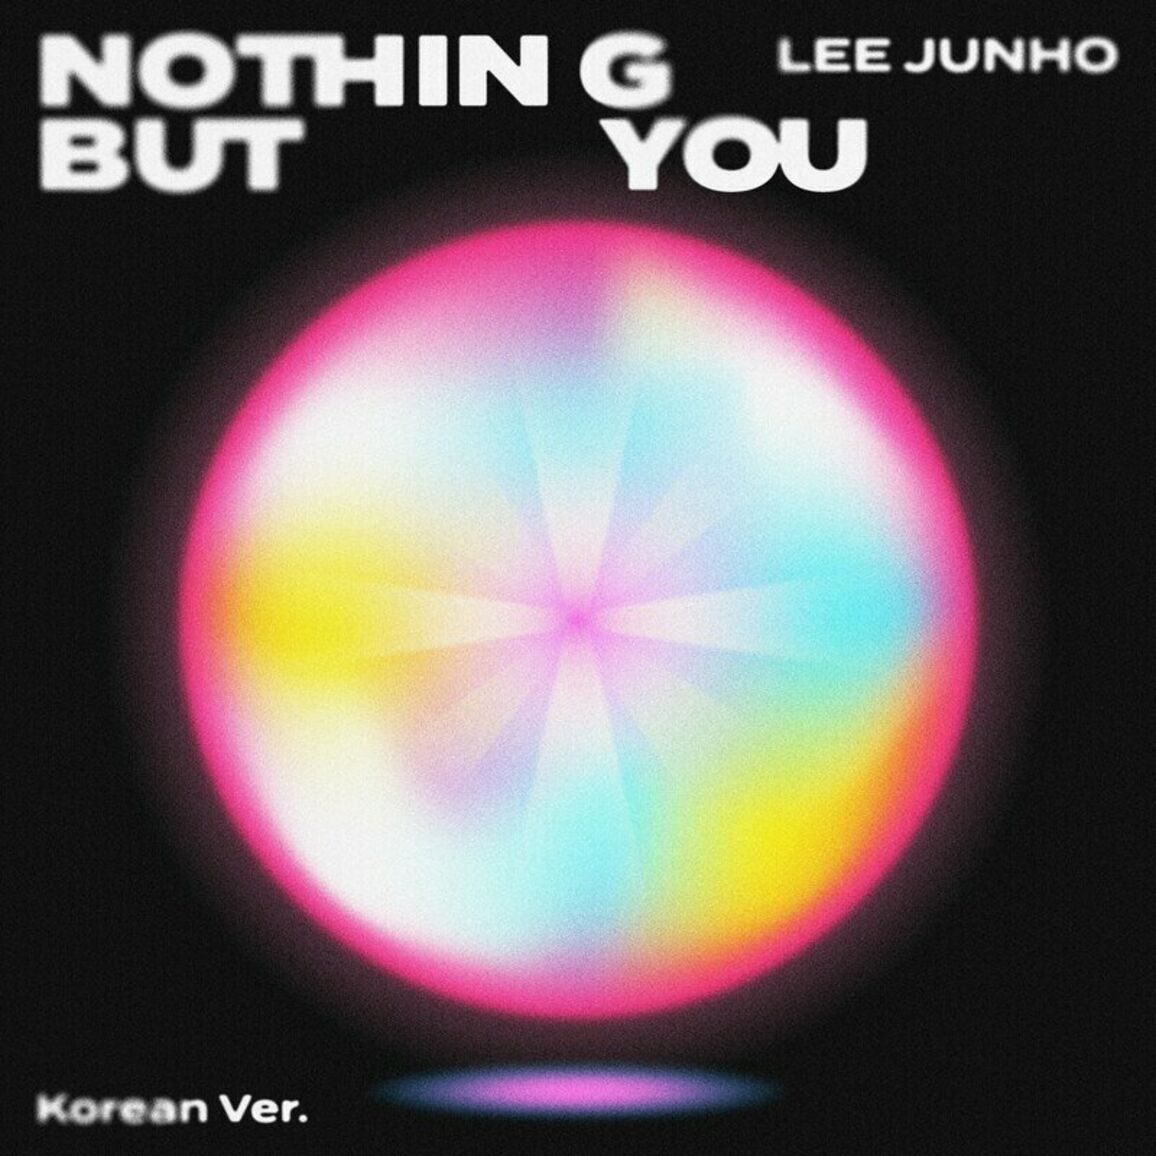 LEE JUNHO – Nothing But You (Korean Ver.) – Single